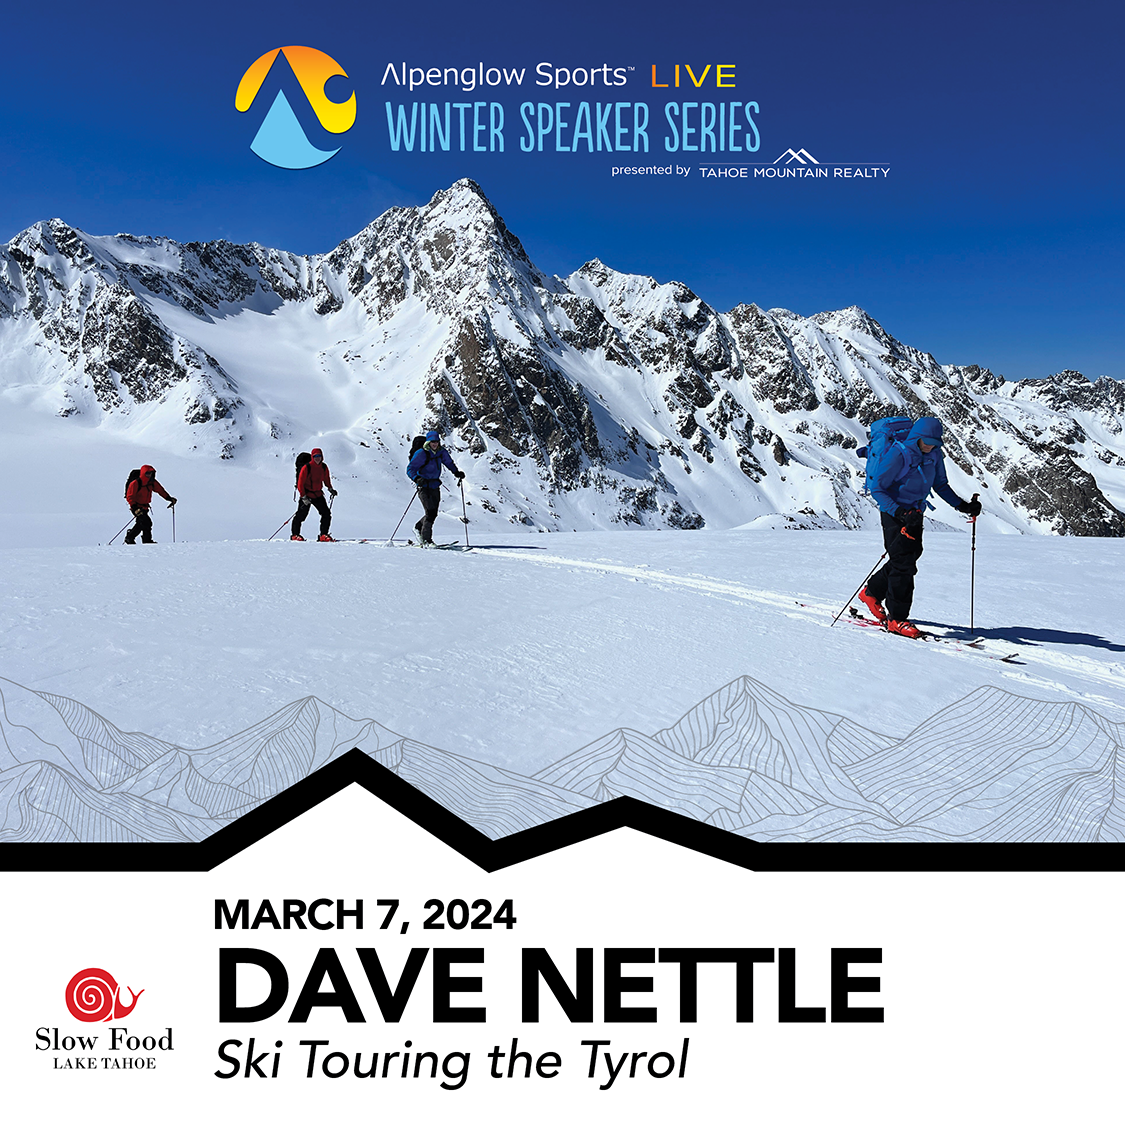 Dave Nettle's Ski Touring The Tyrol